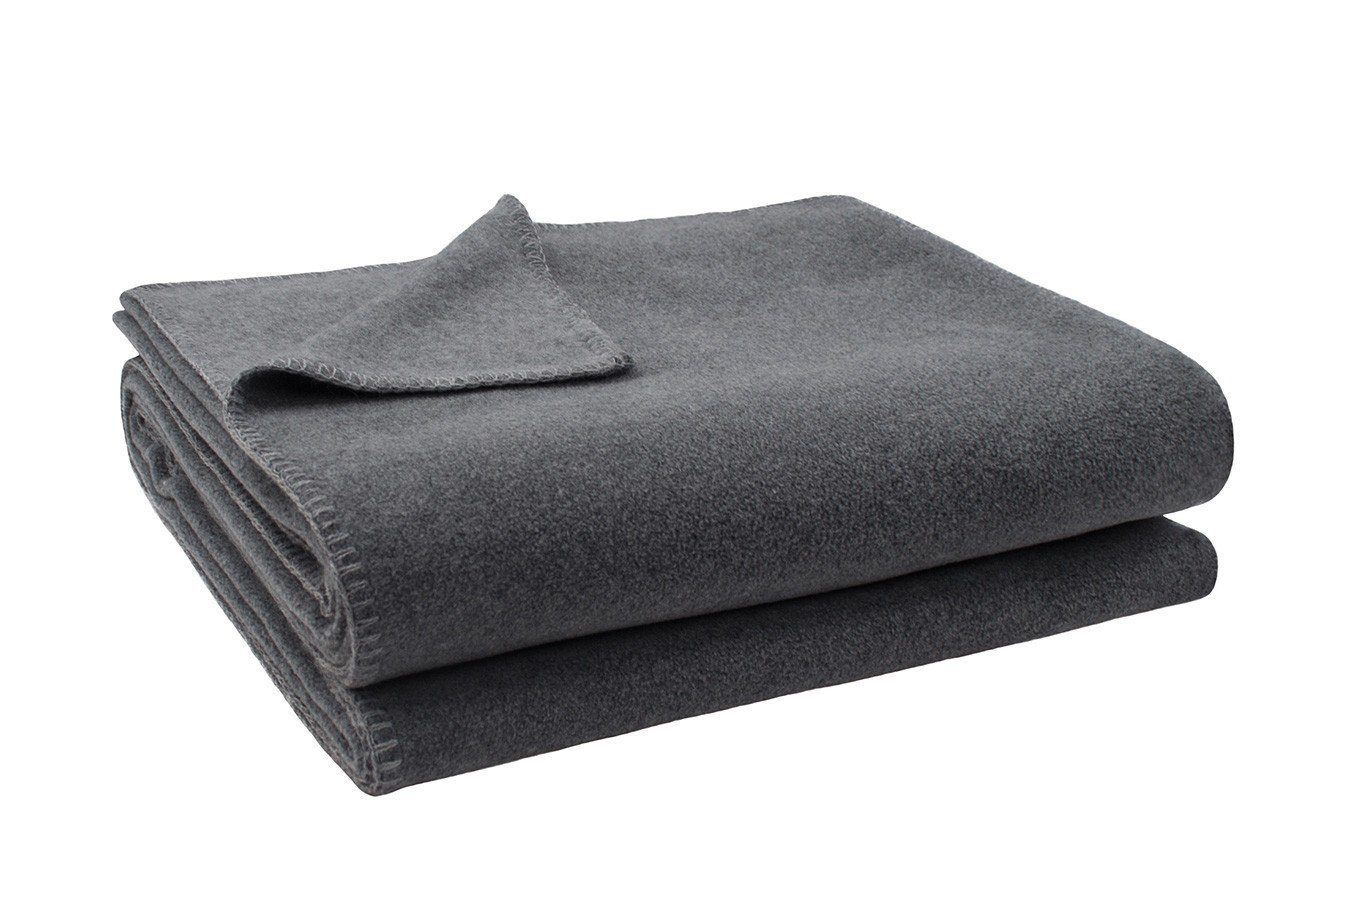 Wohndecke Soft-Fleece Decke 110 x 150 cm medium grau meliert, daslagerhaus living